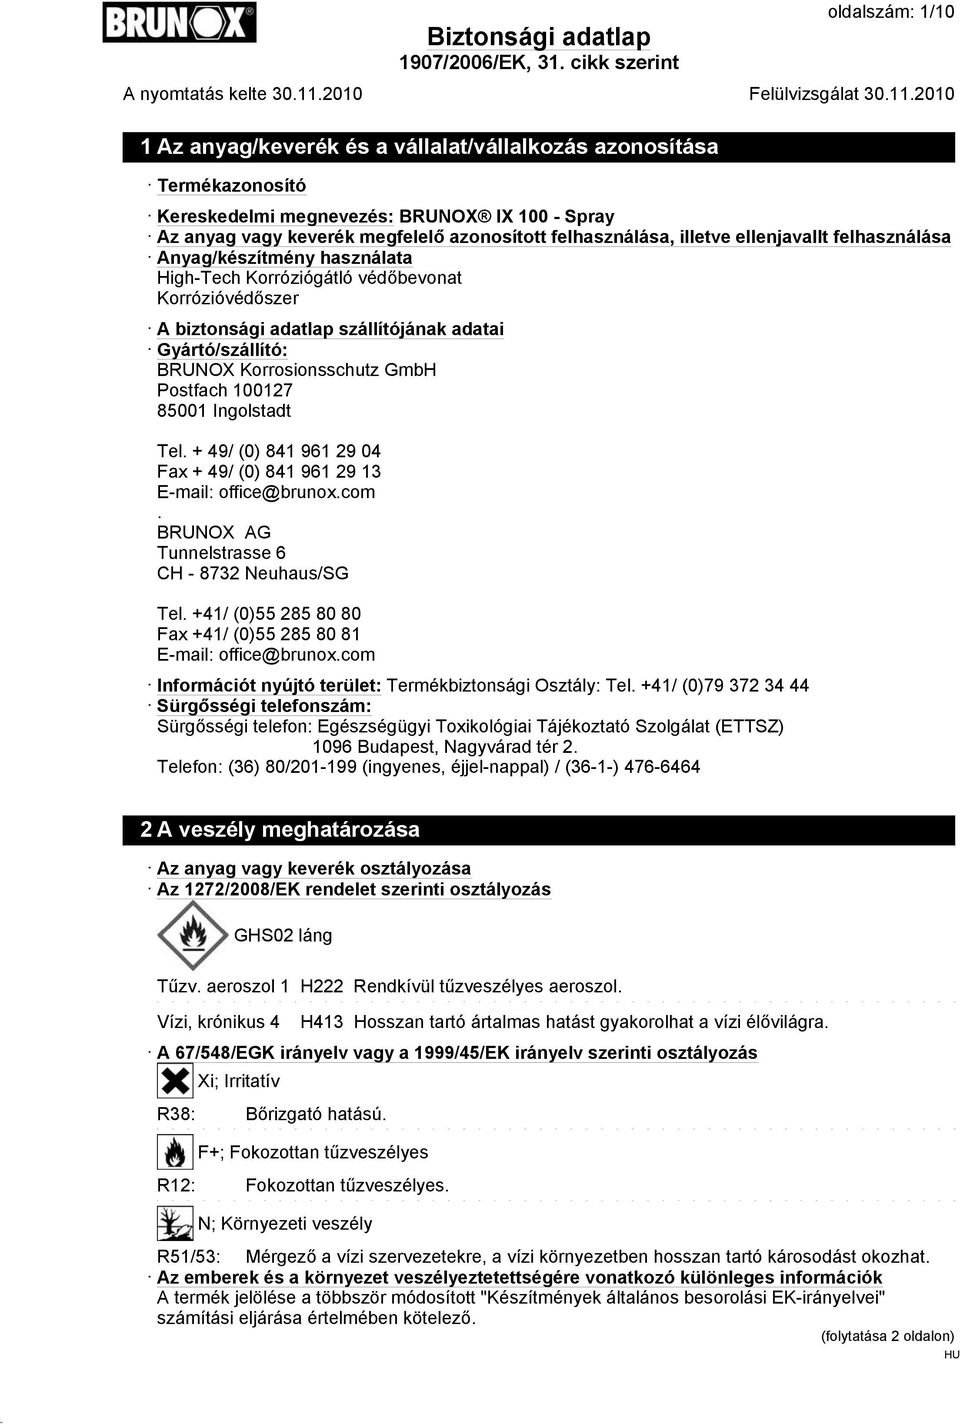 GmbH Postfach 100127 85001 Ingolstadt Tel. + 49/ (0) 841 961 29 04 Fax + 49/ (0) 841 961 29 13 E-mail: office@brunox.com. BRUNOX AG Tunnelstrasse 6 CH - 8732 Neuhaus/SG Tel.